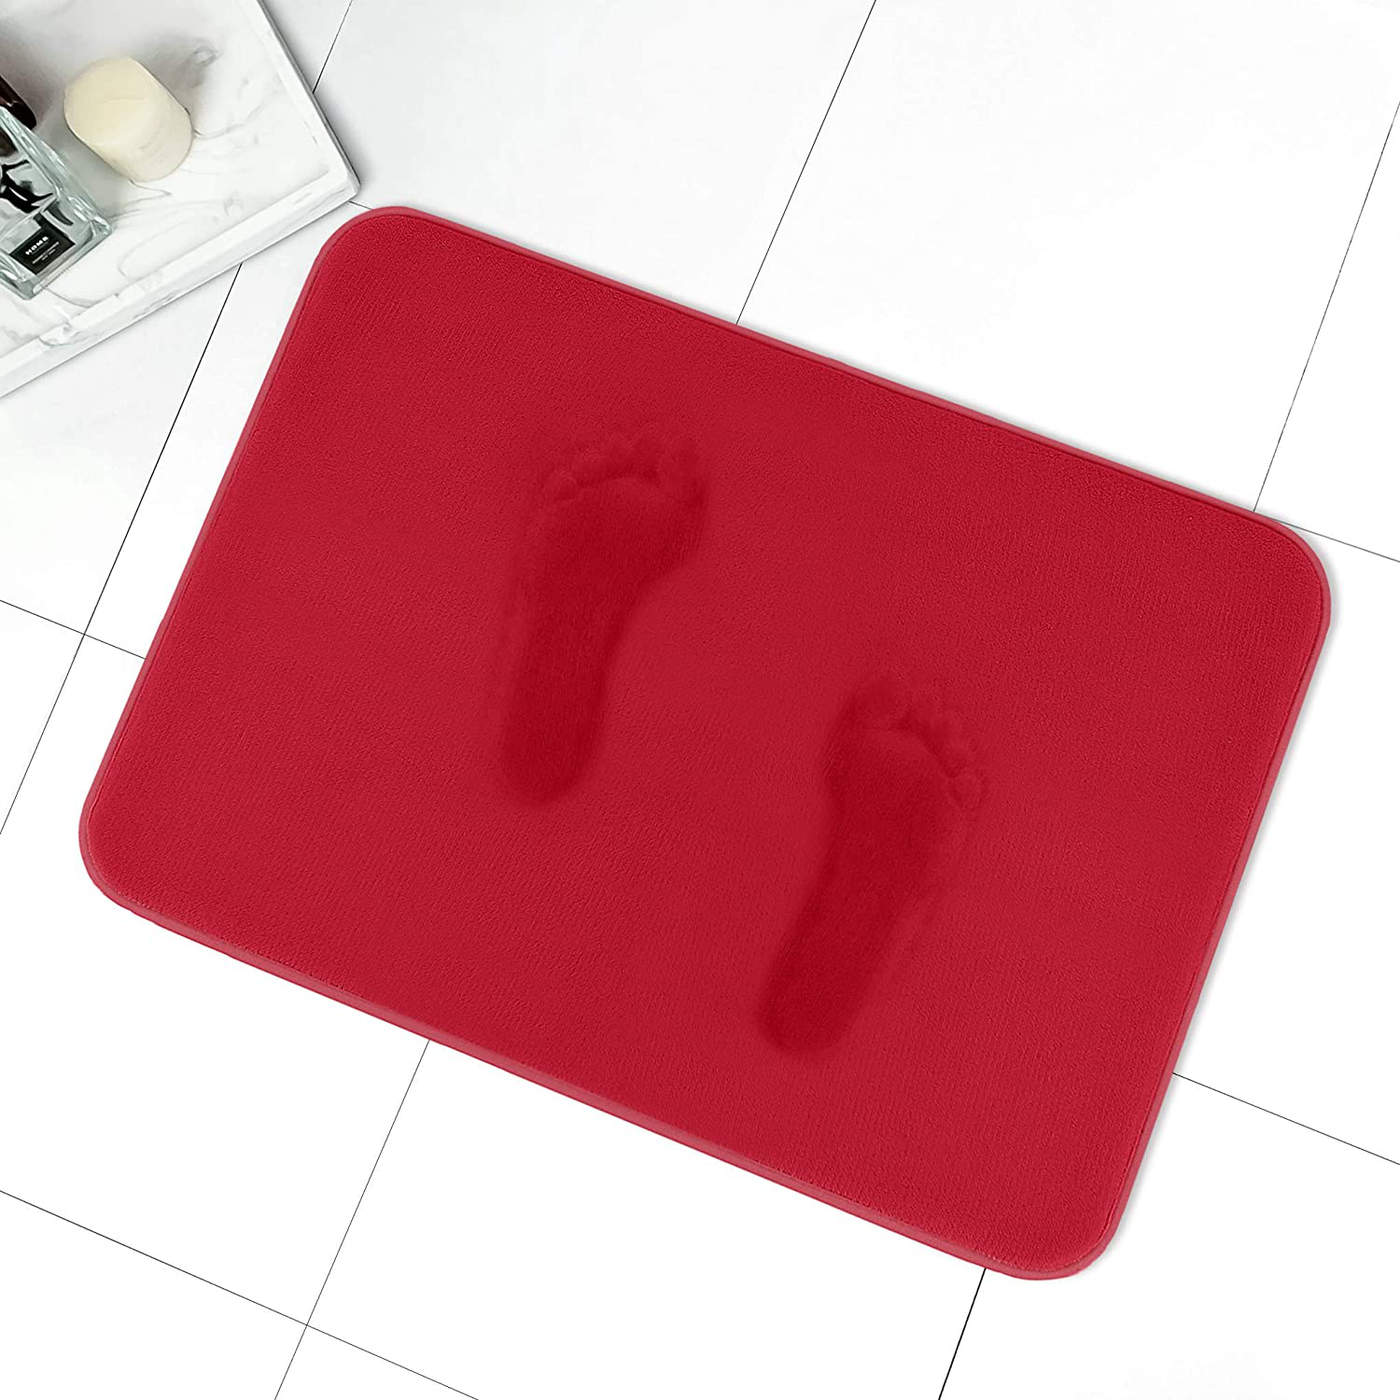 Memory Foam Bathroom Rugs Non-Slip Water Absorbent Fast Dry Luxury Soft Bath mat